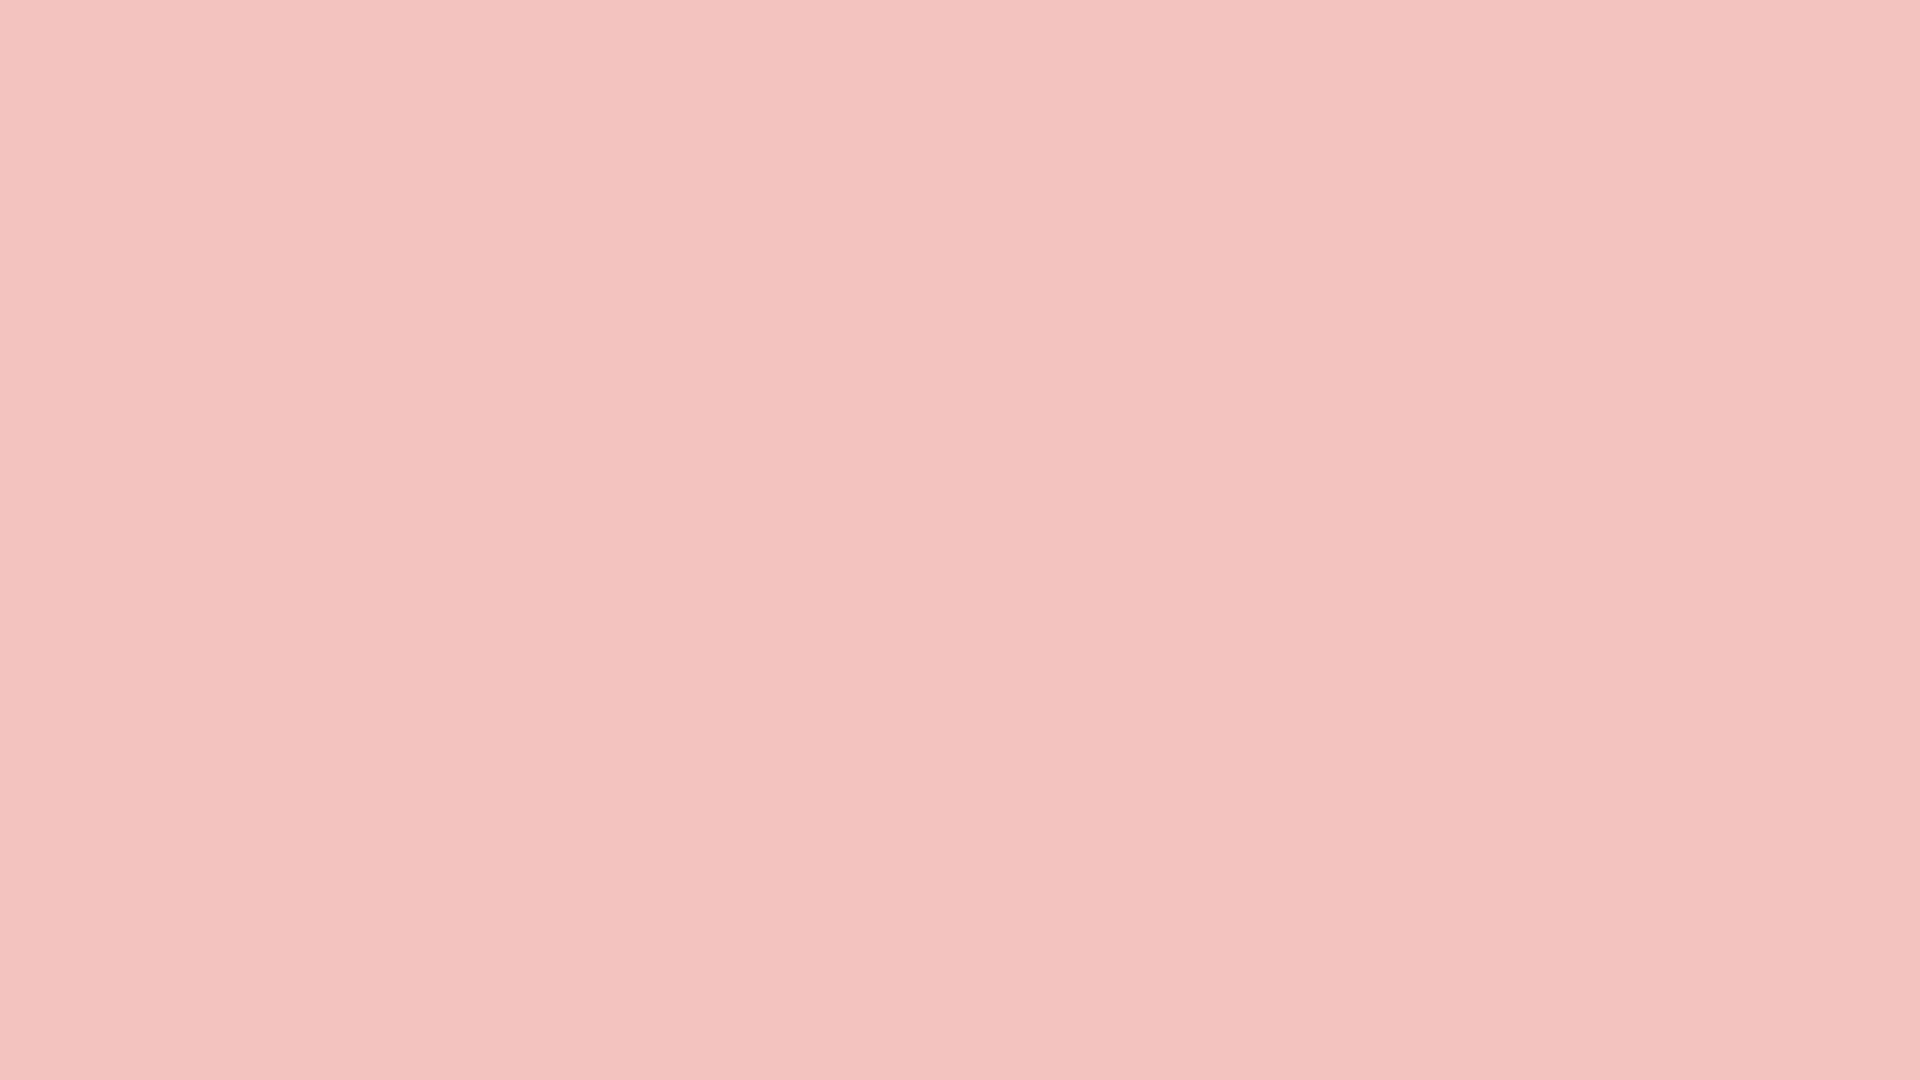 A Simple and Elegant Plain Pink Desktop Wallpaper